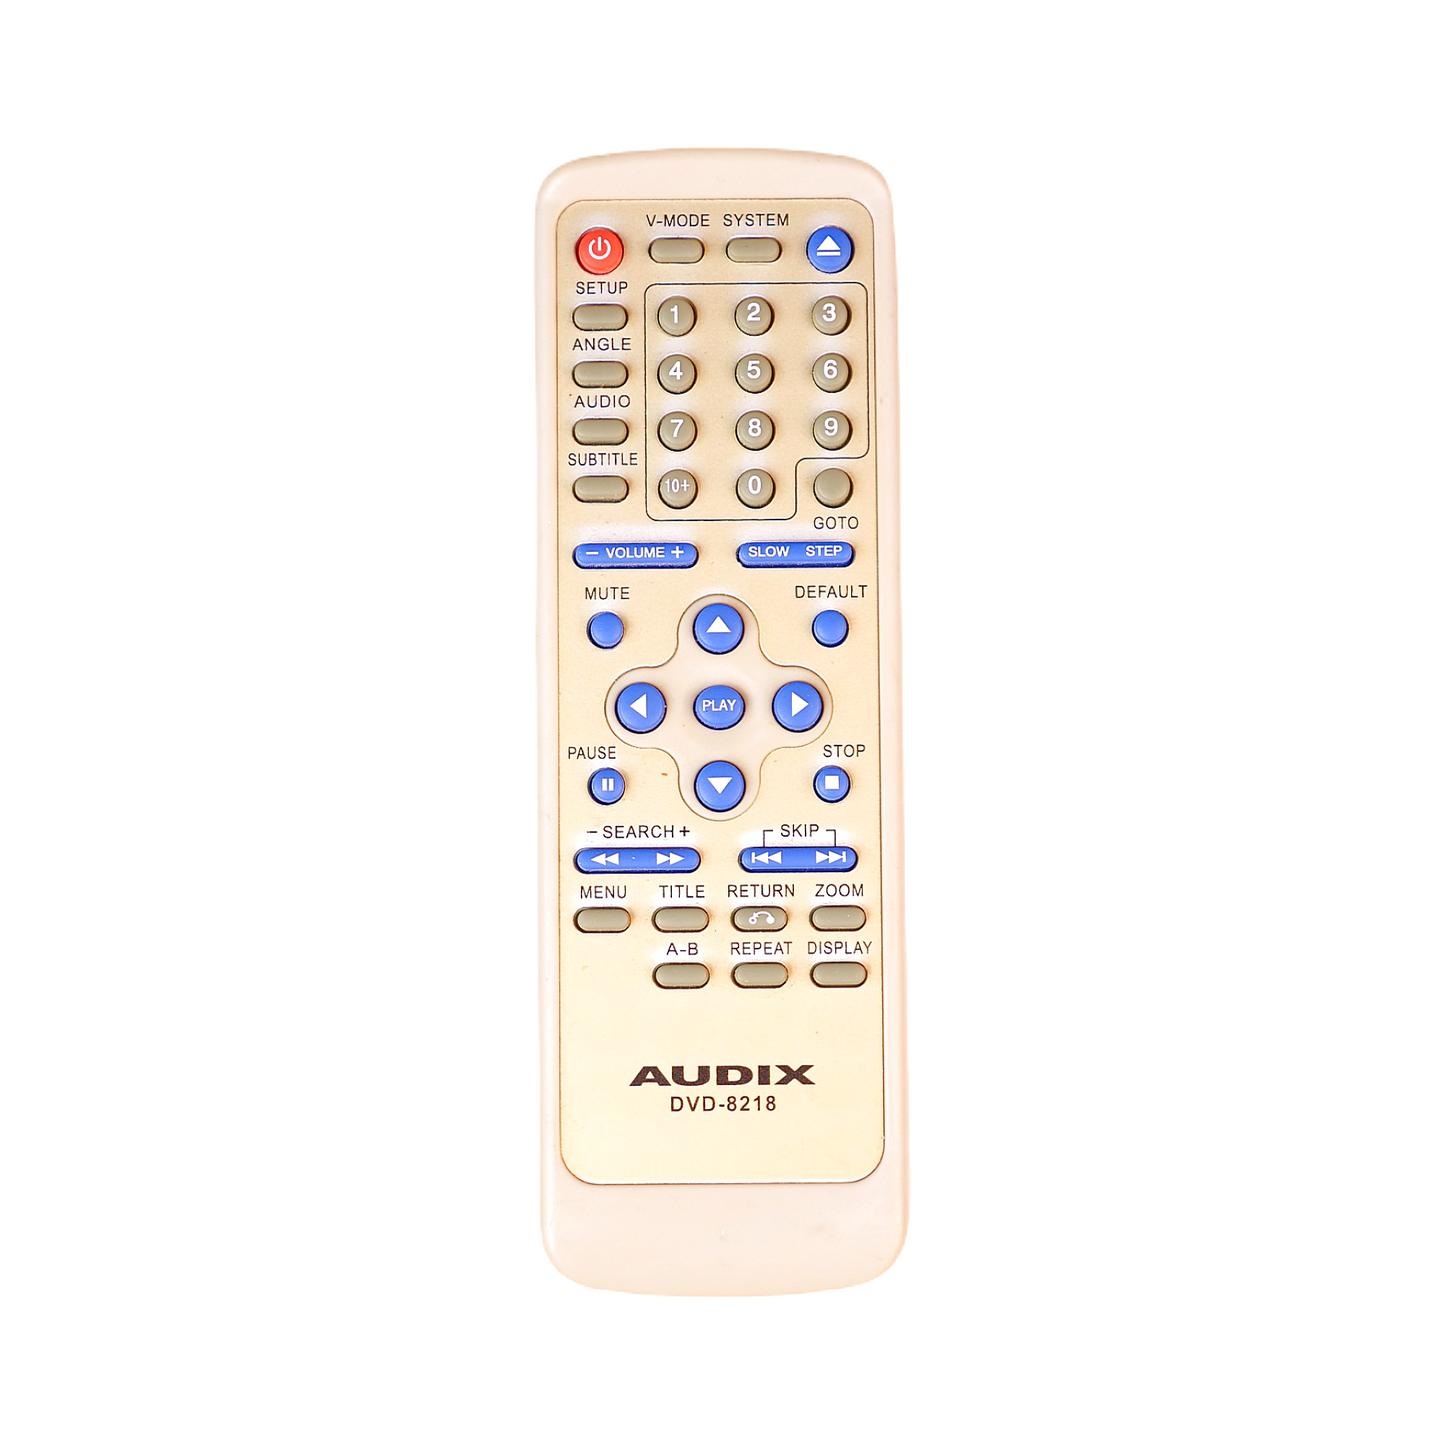 Audix DVD-8218 - REMOTE CONTROL